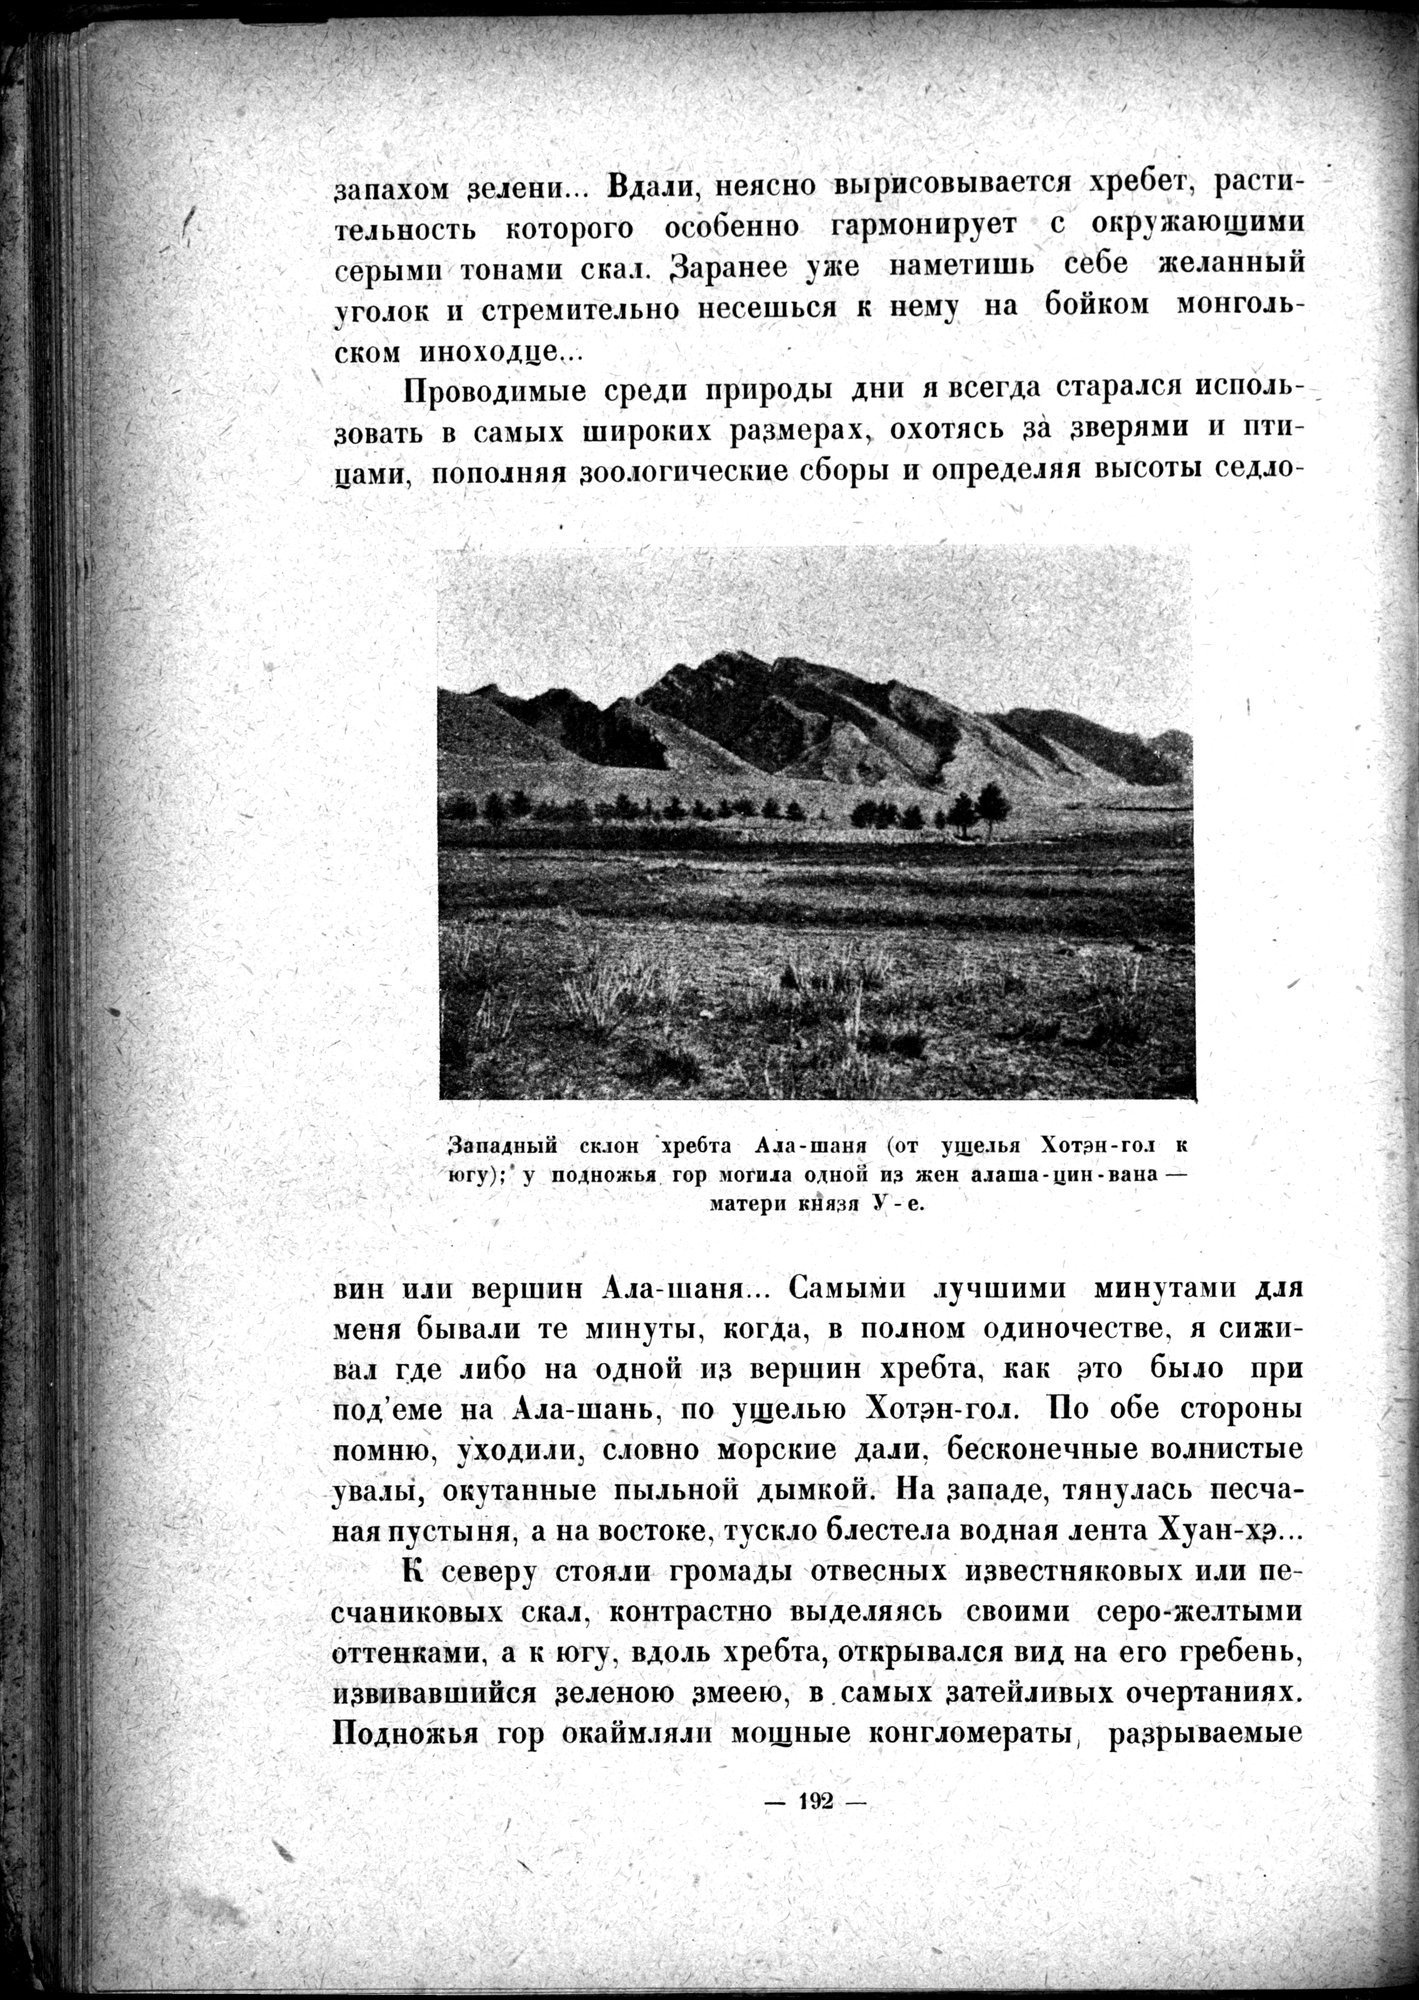 Mongoliya i Amdo i mertby gorod Khara-Khoto : vol.1 / Page 230 (Grayscale High Resolution Image)